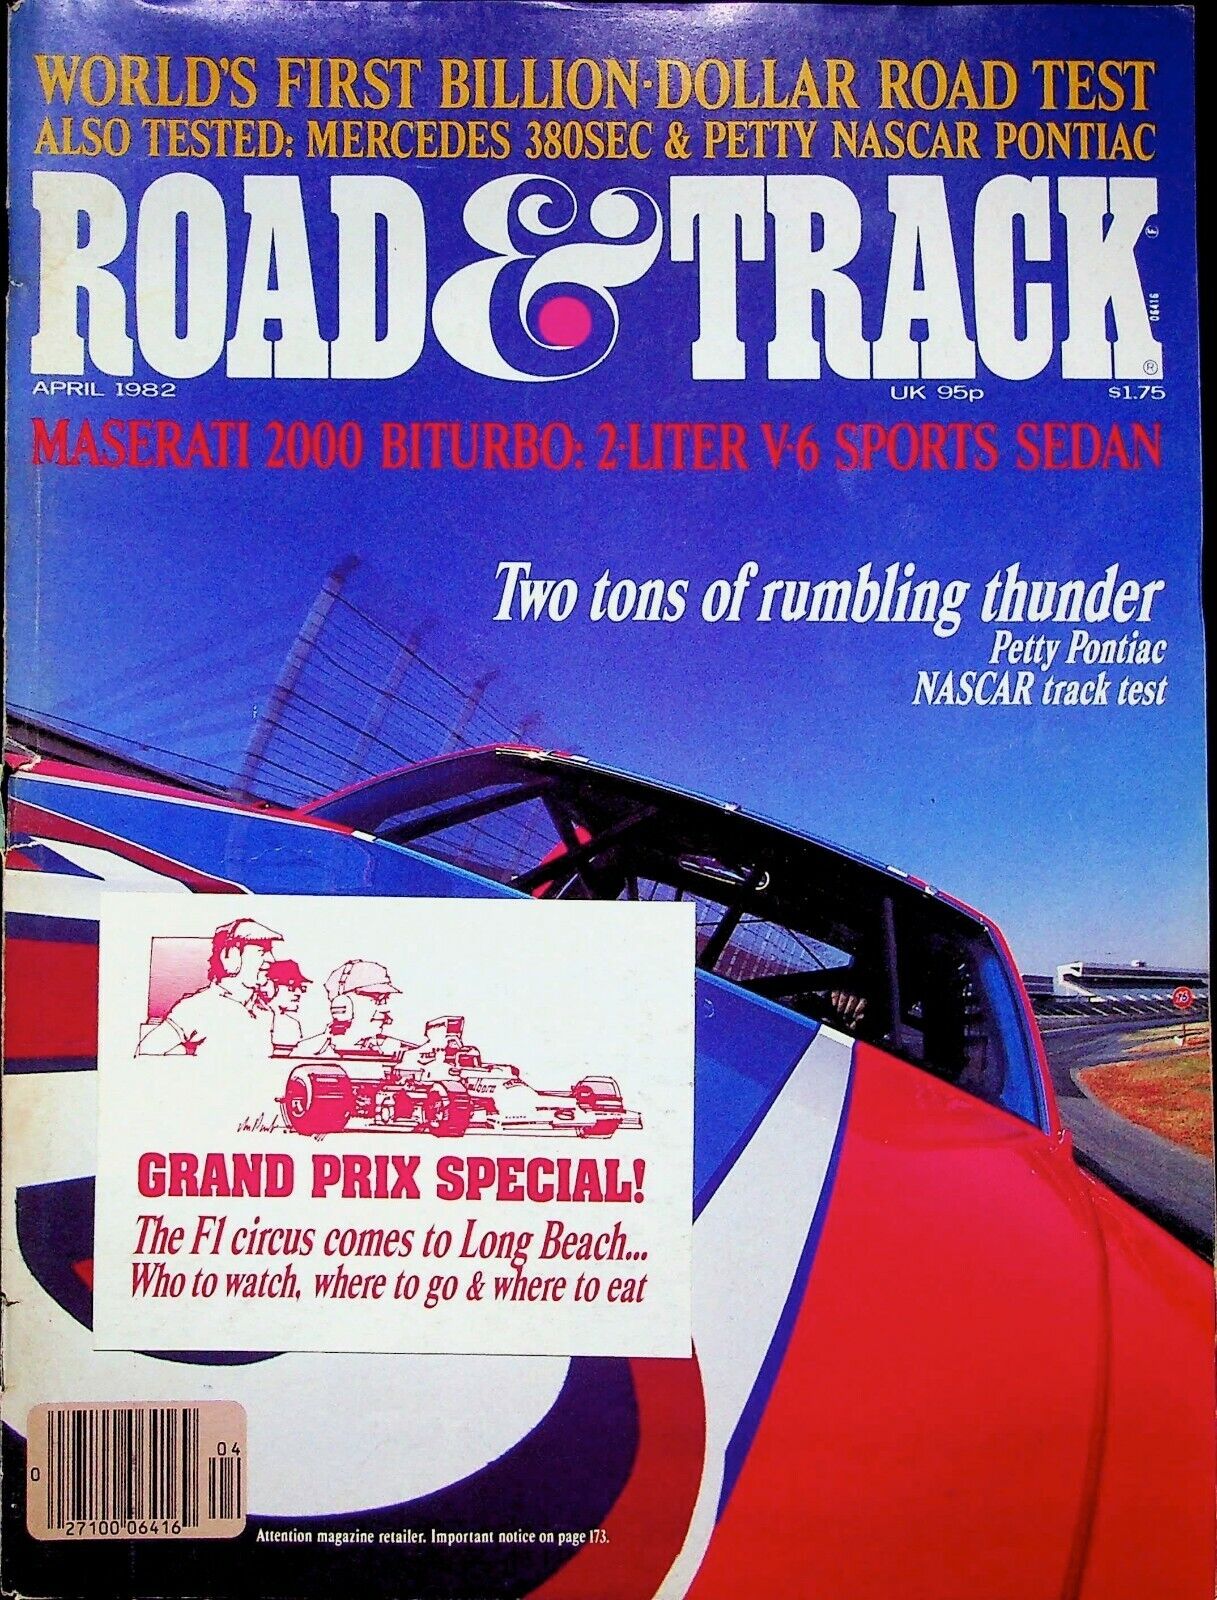 MASERATI 2000 BITURBO - ROAD & TRACK MAGAZINE, APRIL 1982 VOLUME 33. NUMBER 8